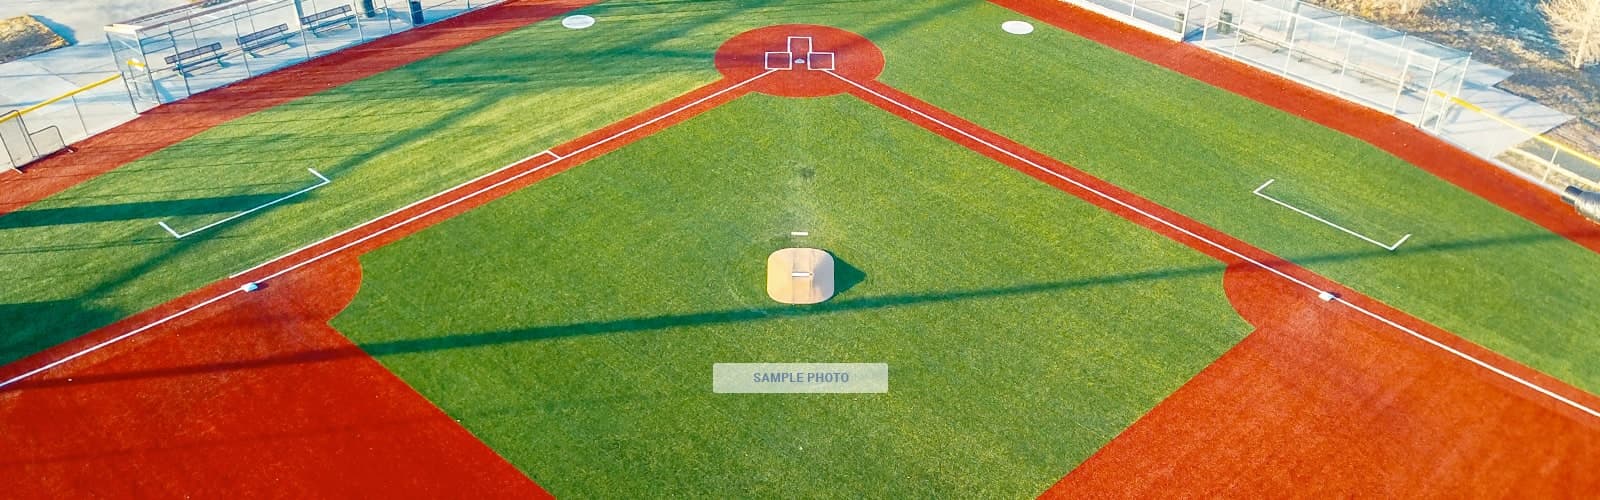 Frankford Site Frankford Field - Baseball in Philadelphia Pennsylvania - undefined